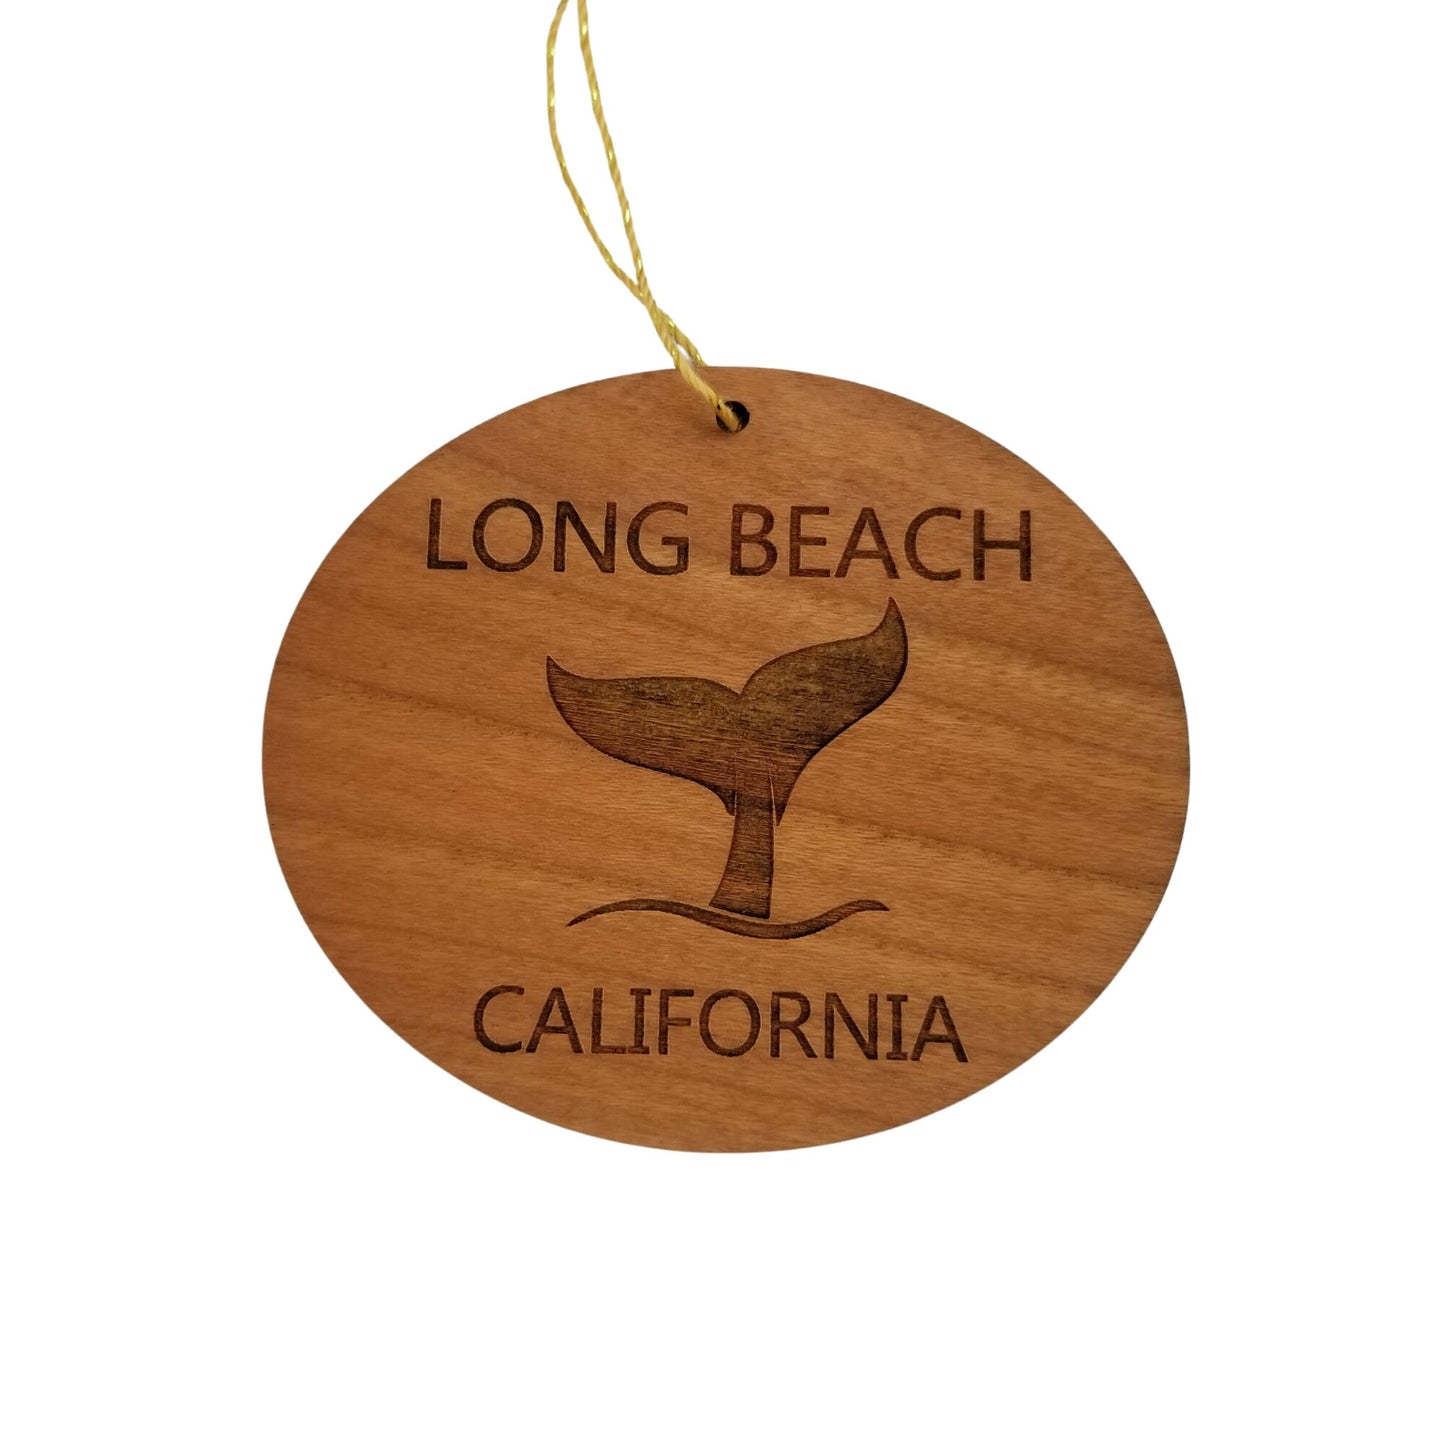 Long Beach Ornament - Handmade Wood Ornament - California Whale Tail Whale Watching - CA Christmas Ornament 3 Inch